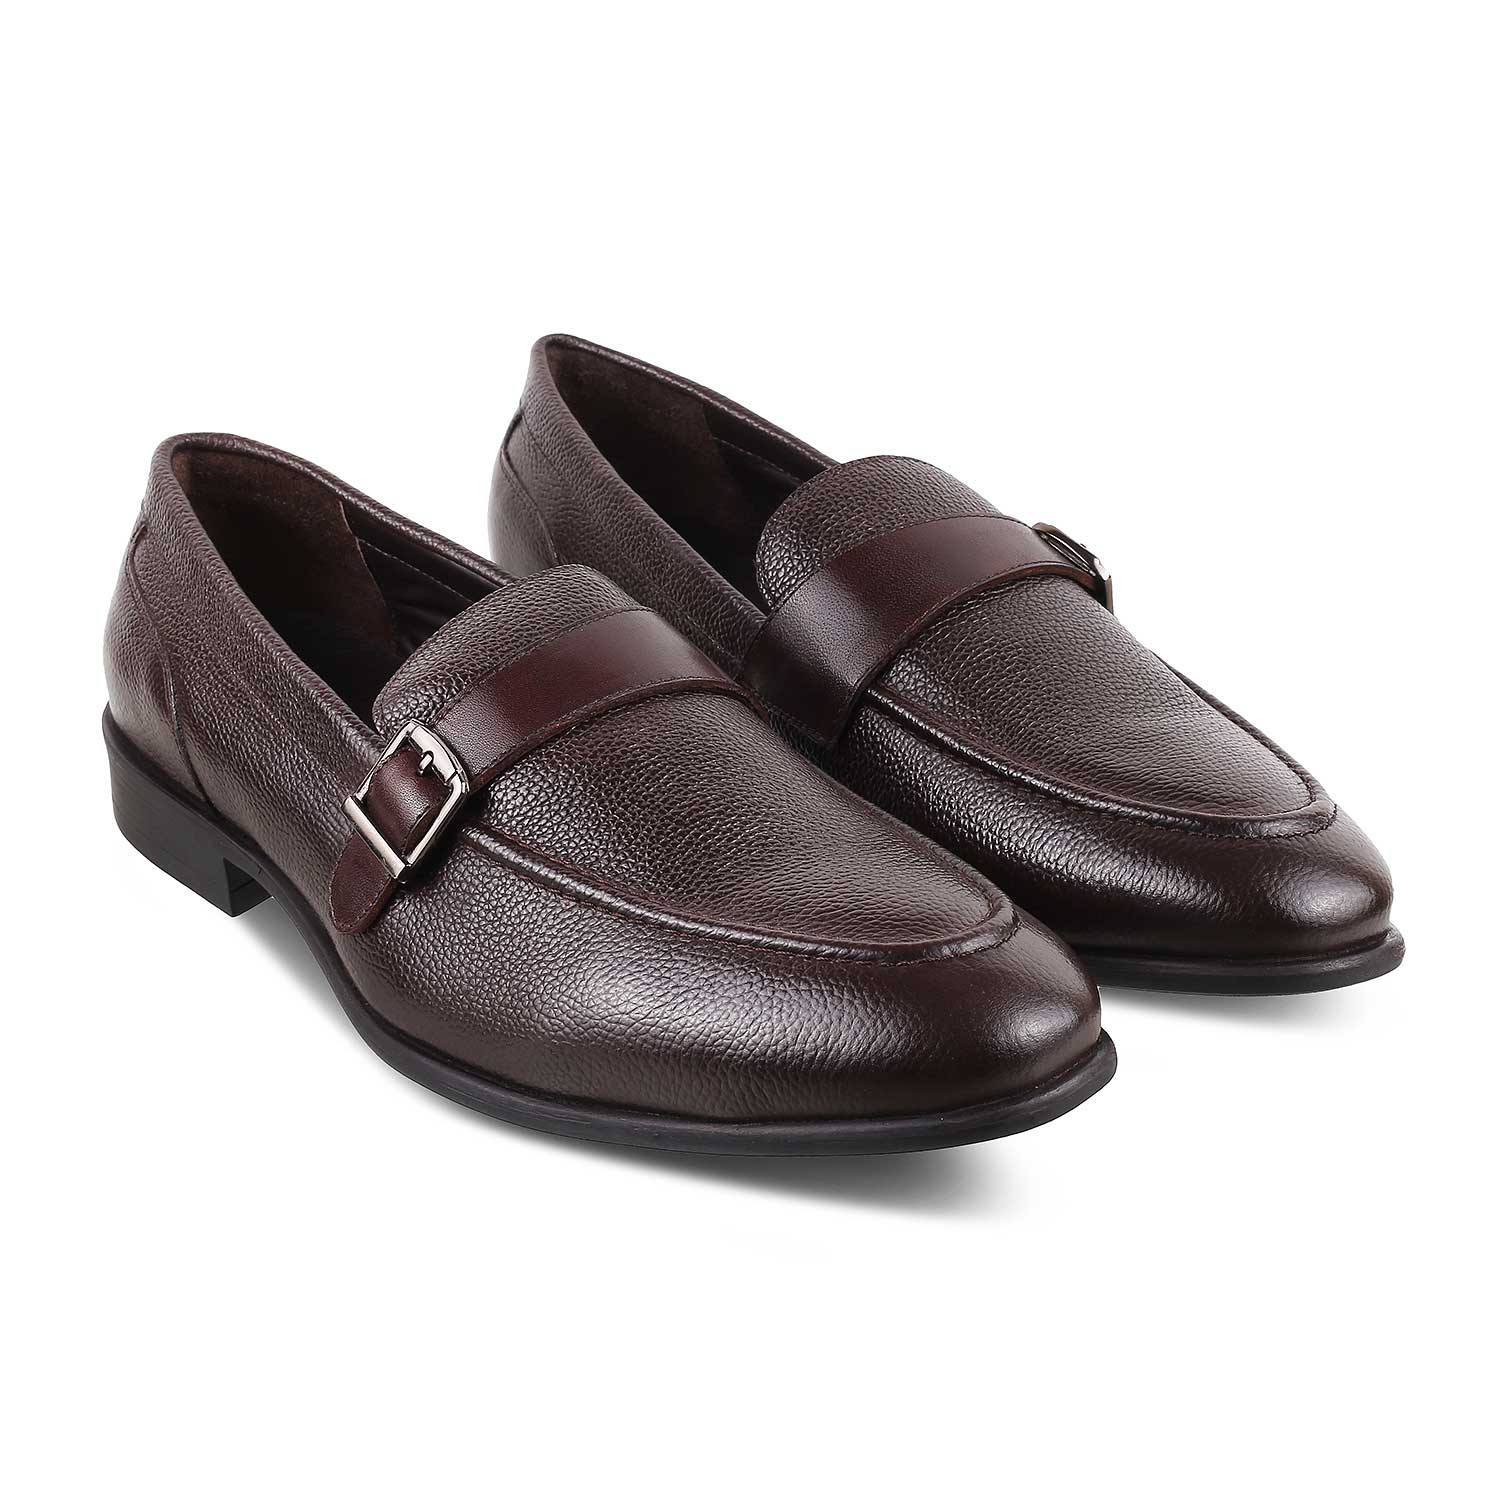 Tresmode-The Heiden Brown Men's Leather Loafers Tresmode-Tresmode